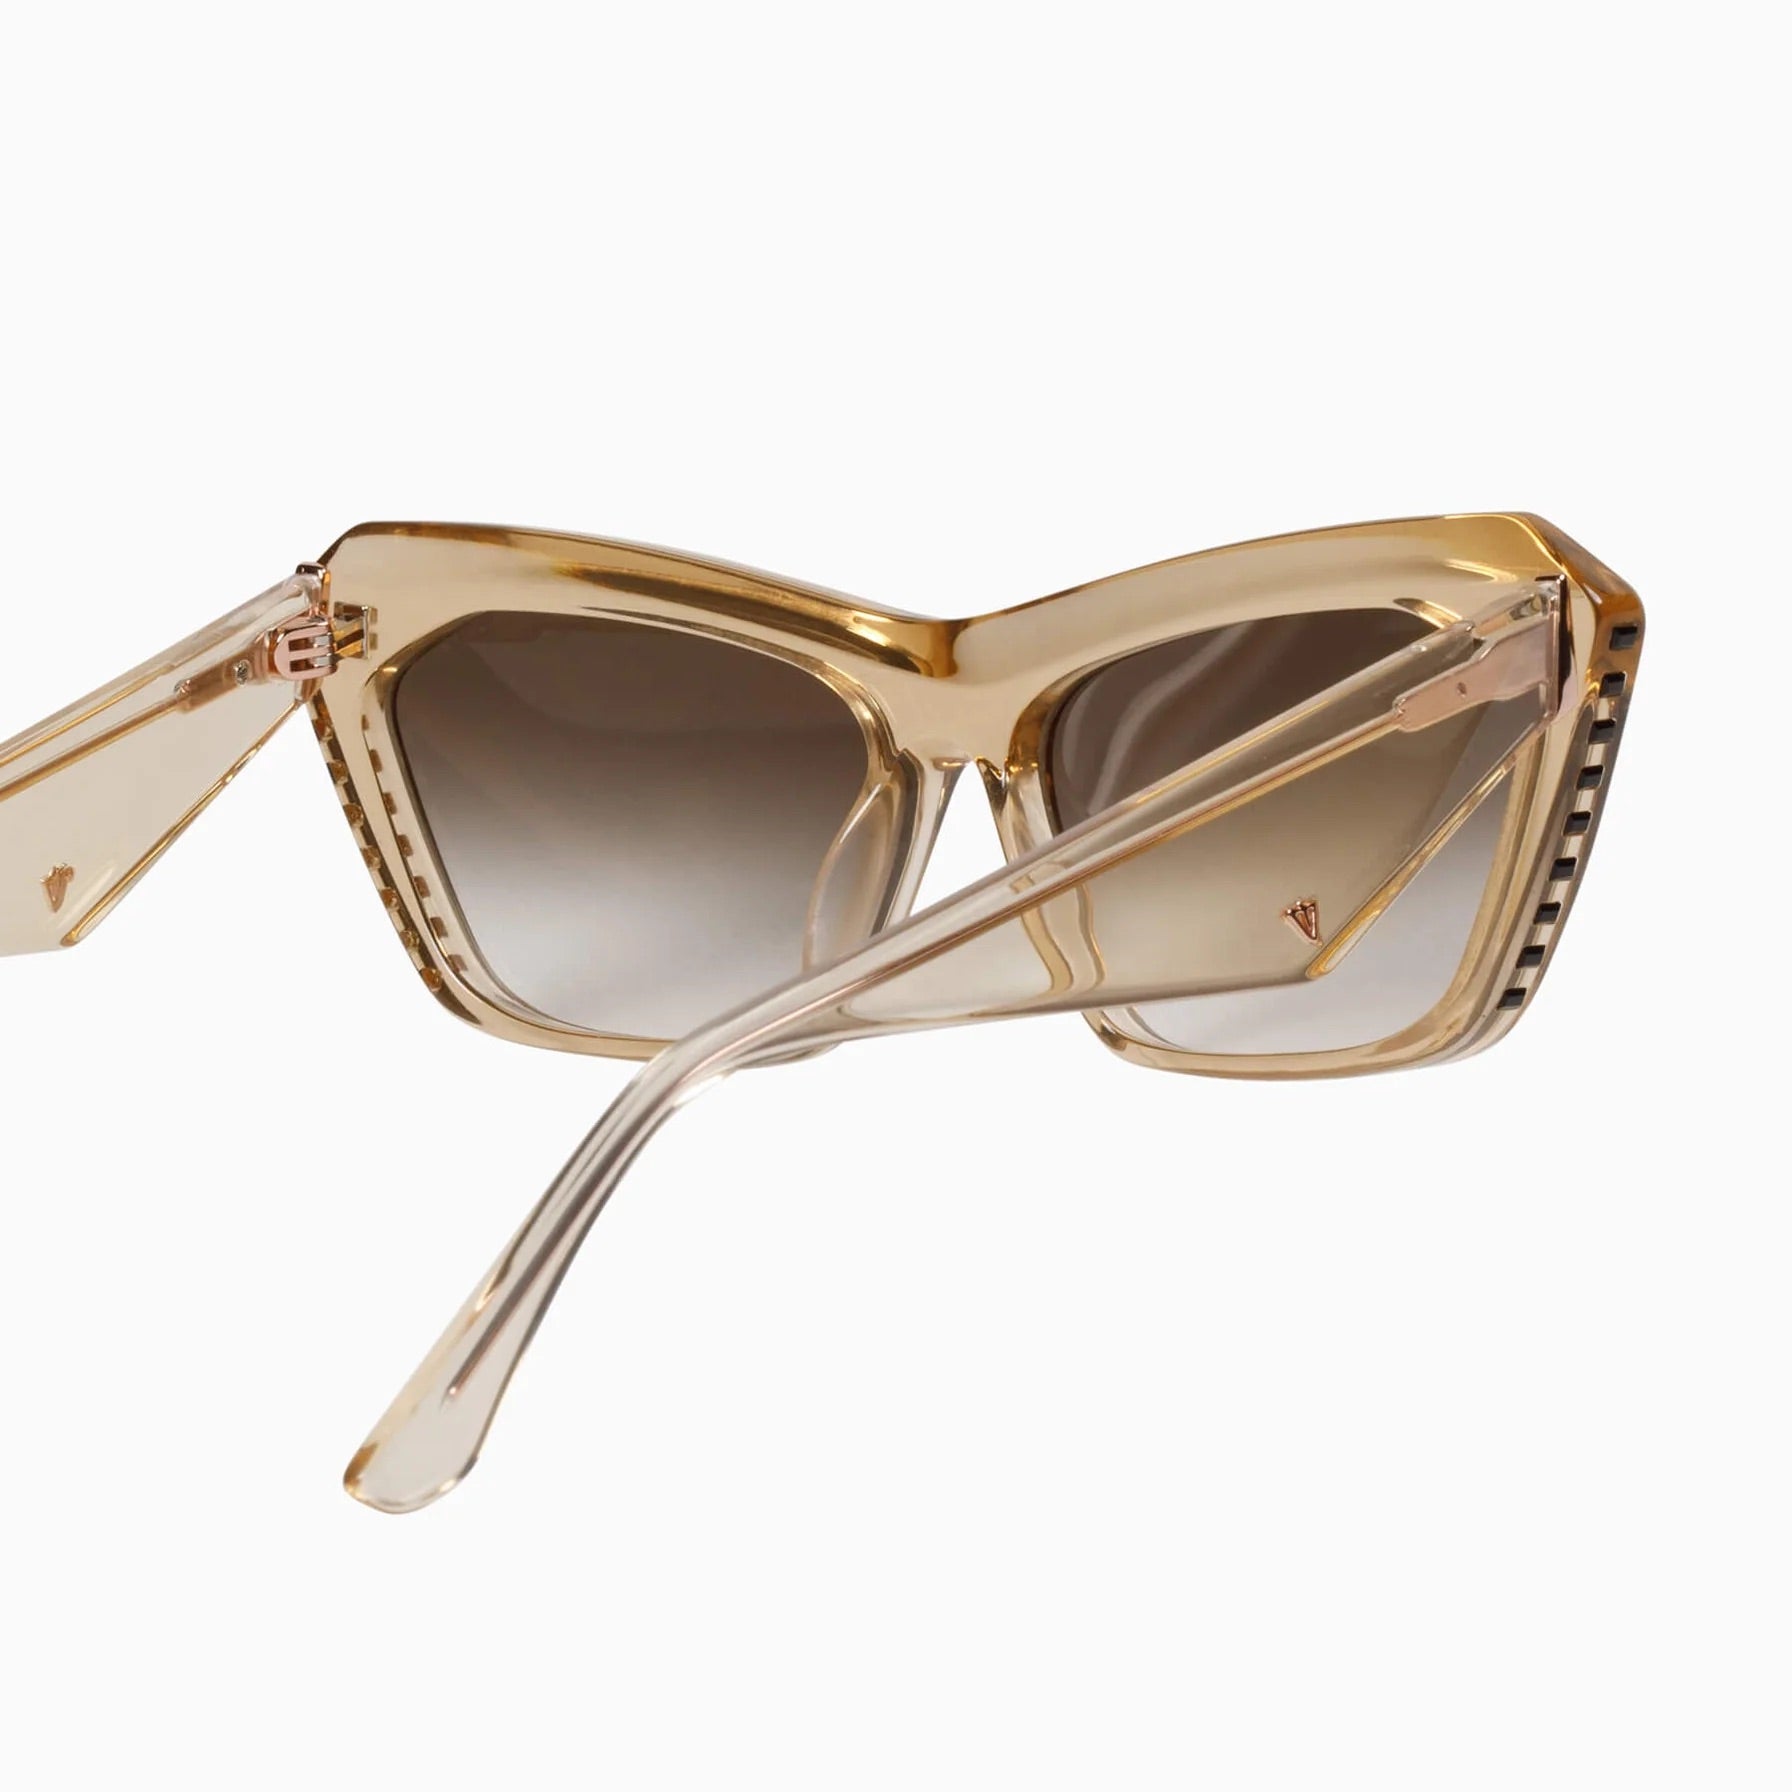 Piaf | Sunglasses - Champagne w. Black Swarovski Crystals Gold Metal Trim / Brown Gradient Lens